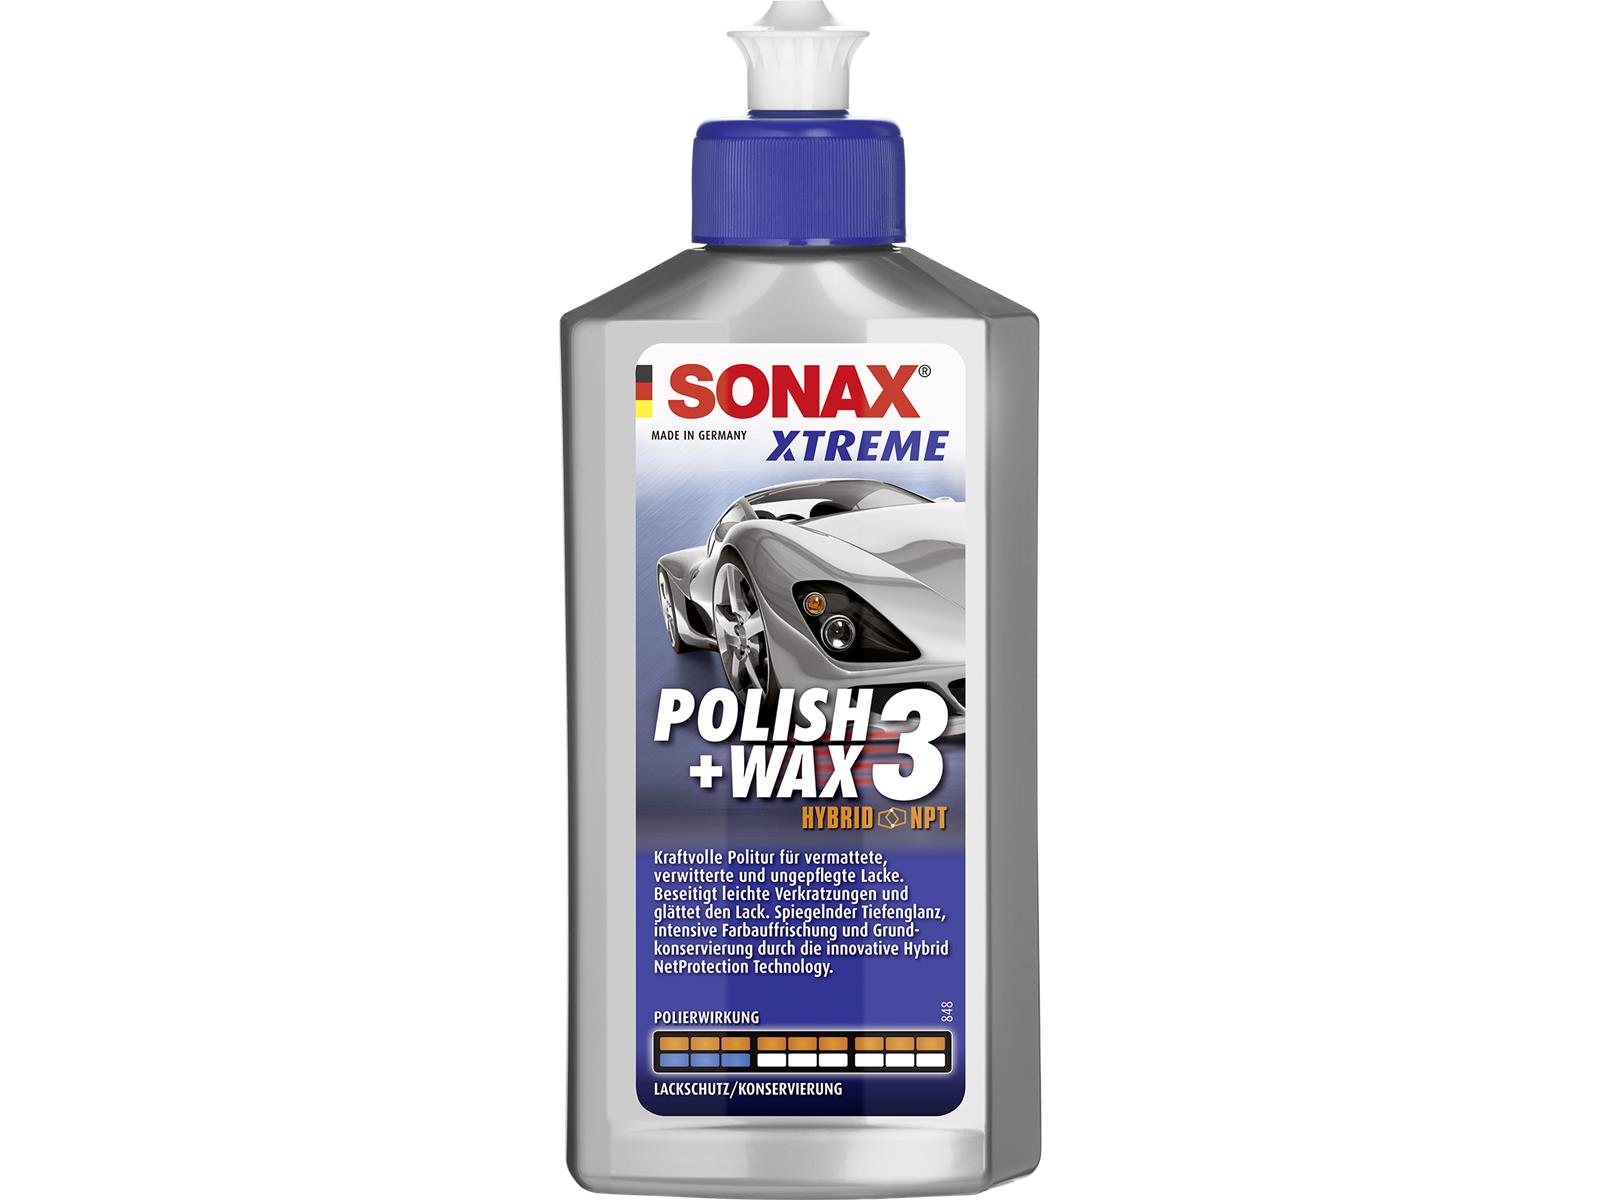 SONAX 02021000 XTREME Polish + Wax 3 Hybrid NPT 250 ml